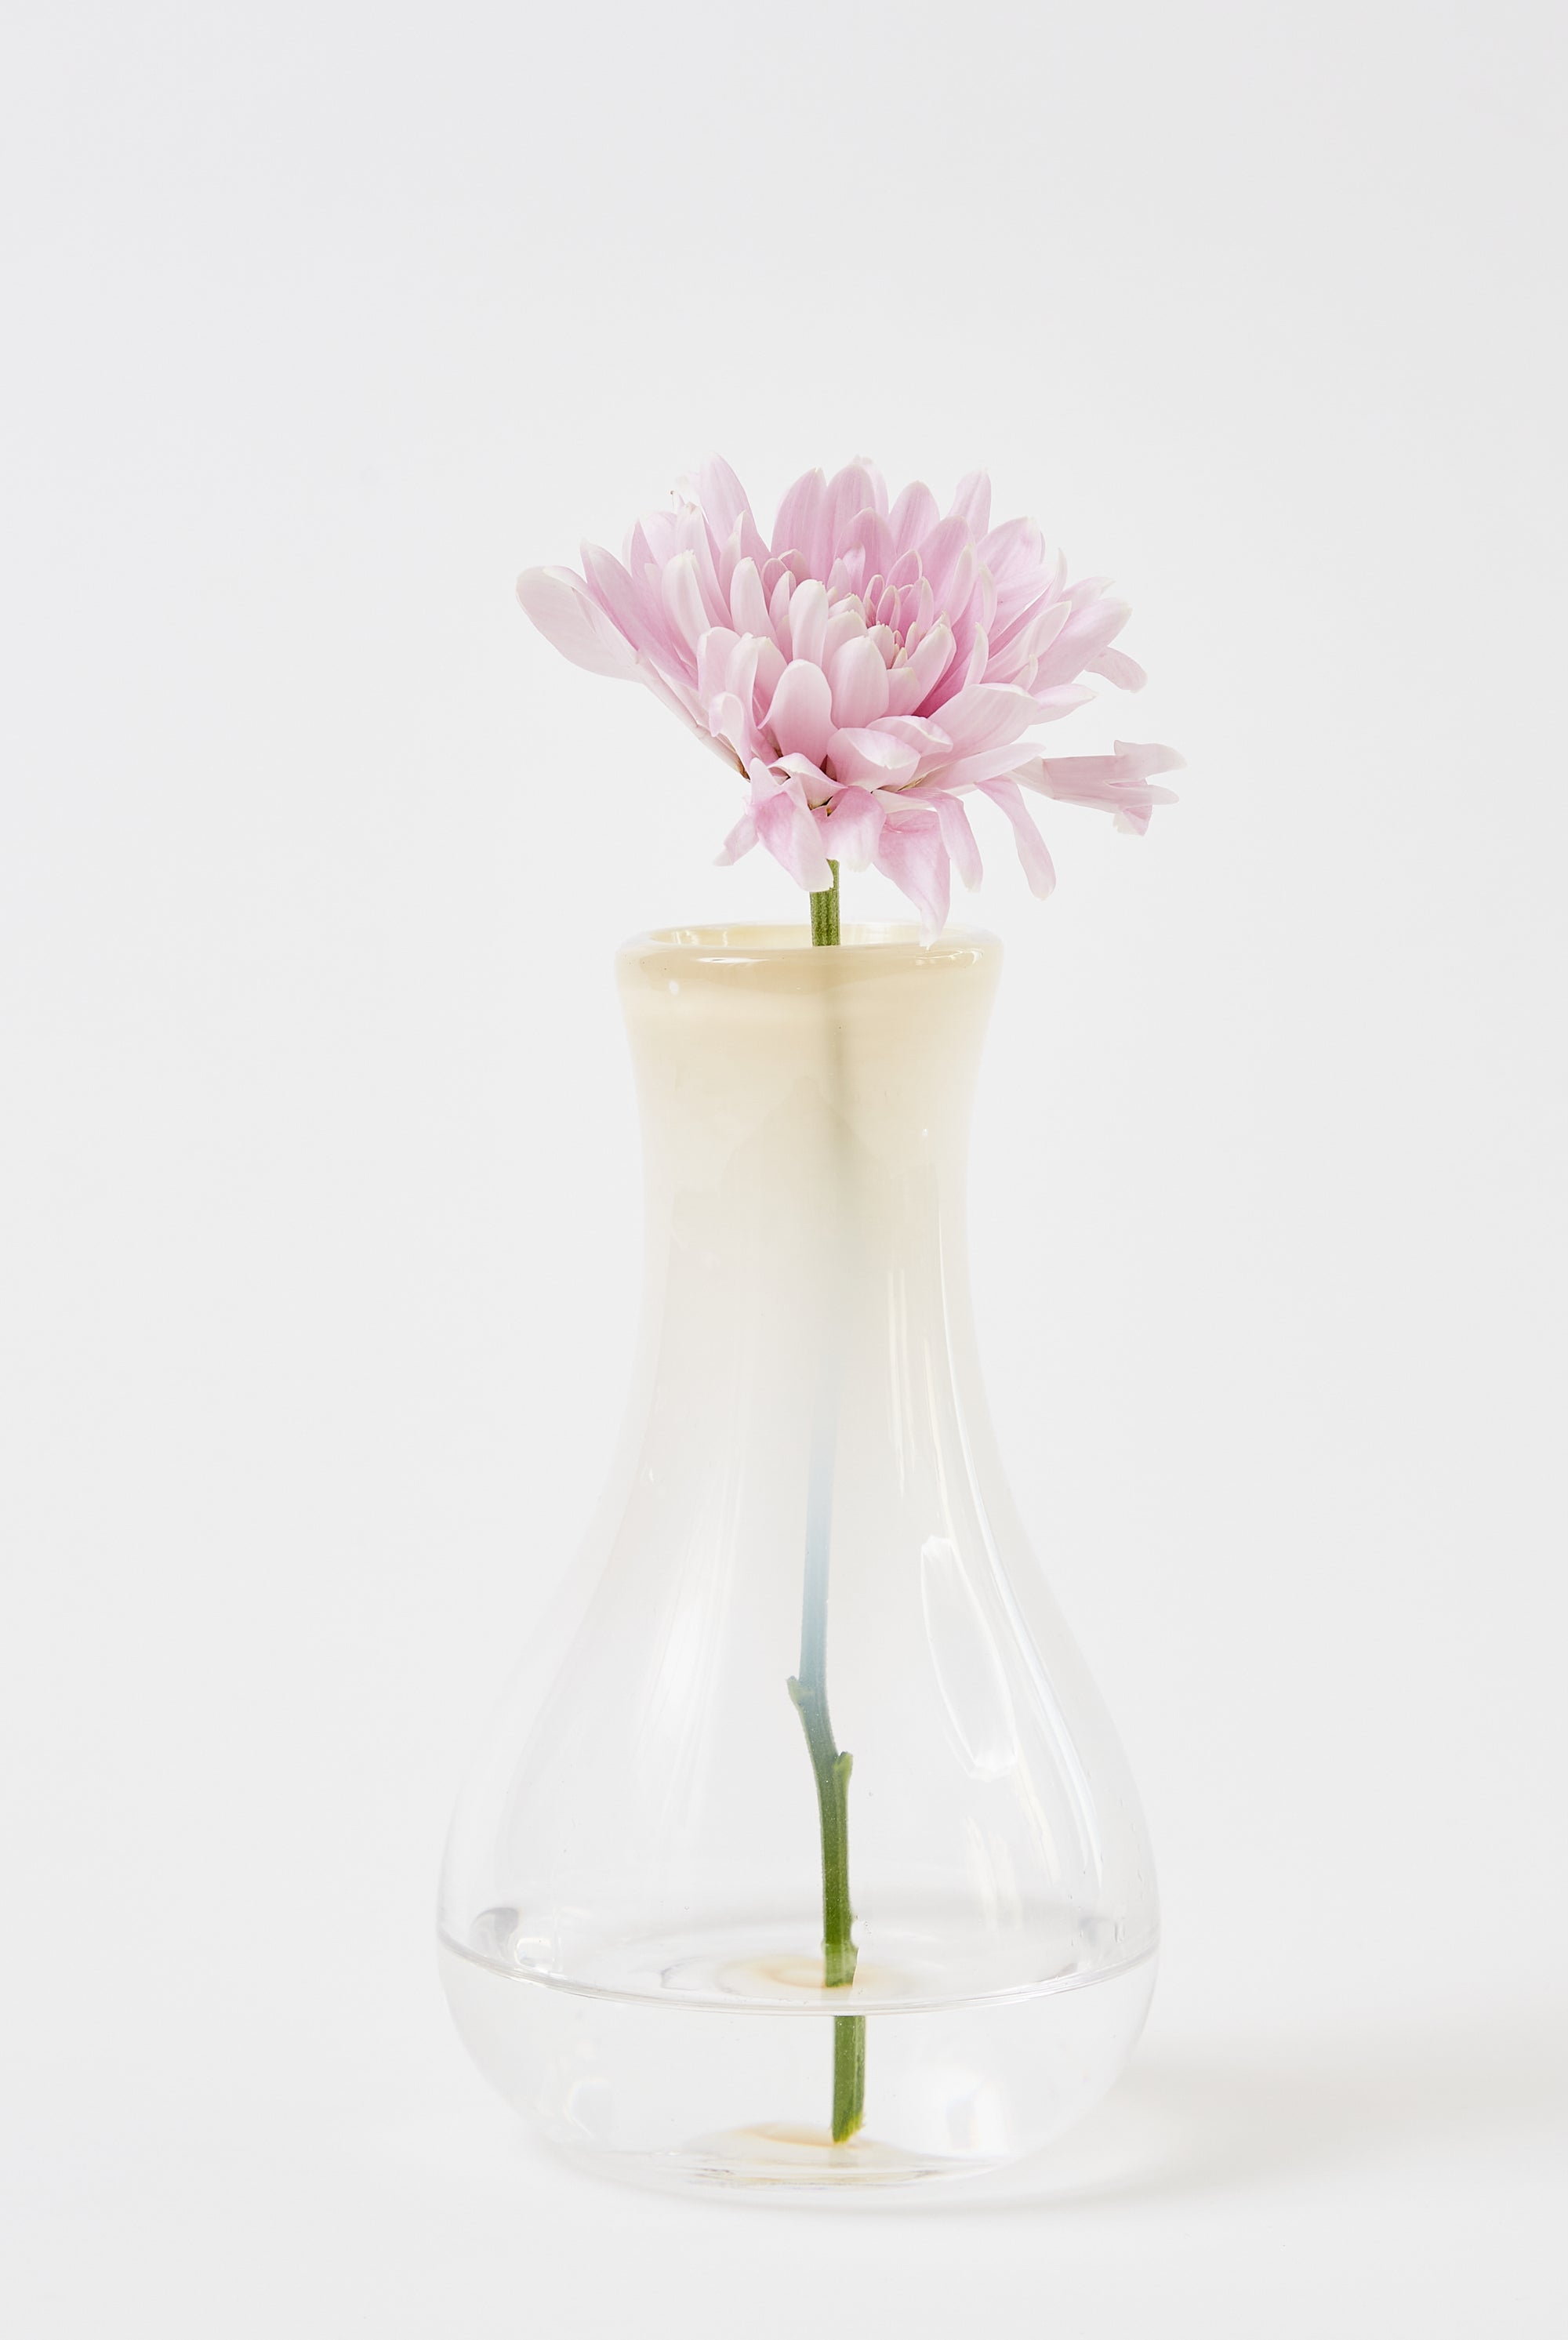 Michael Anchin Vase